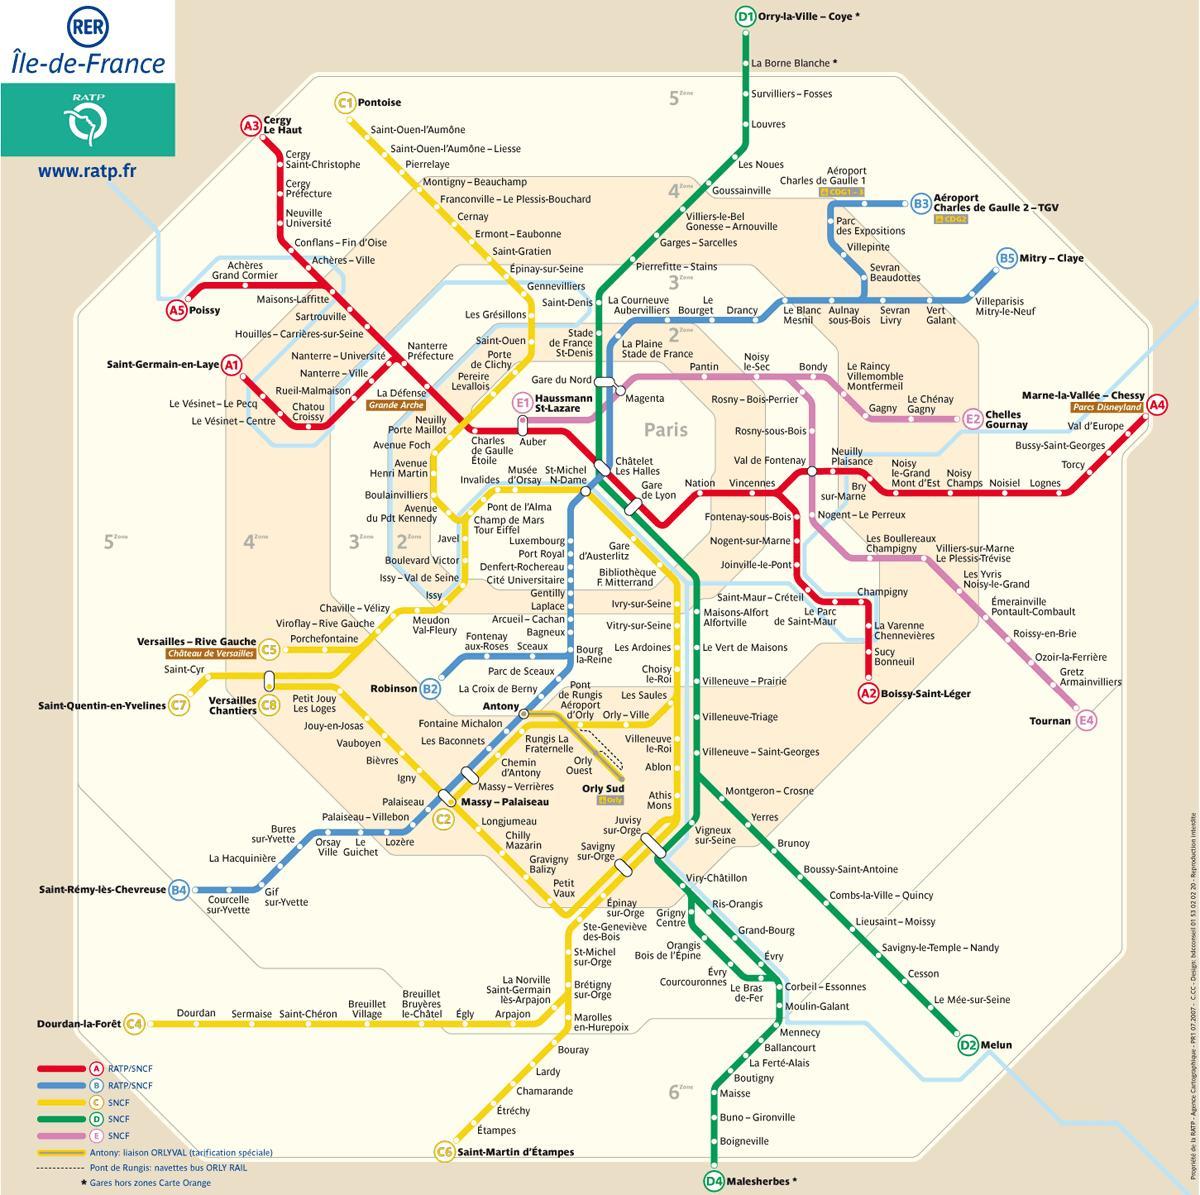 Kart over RER